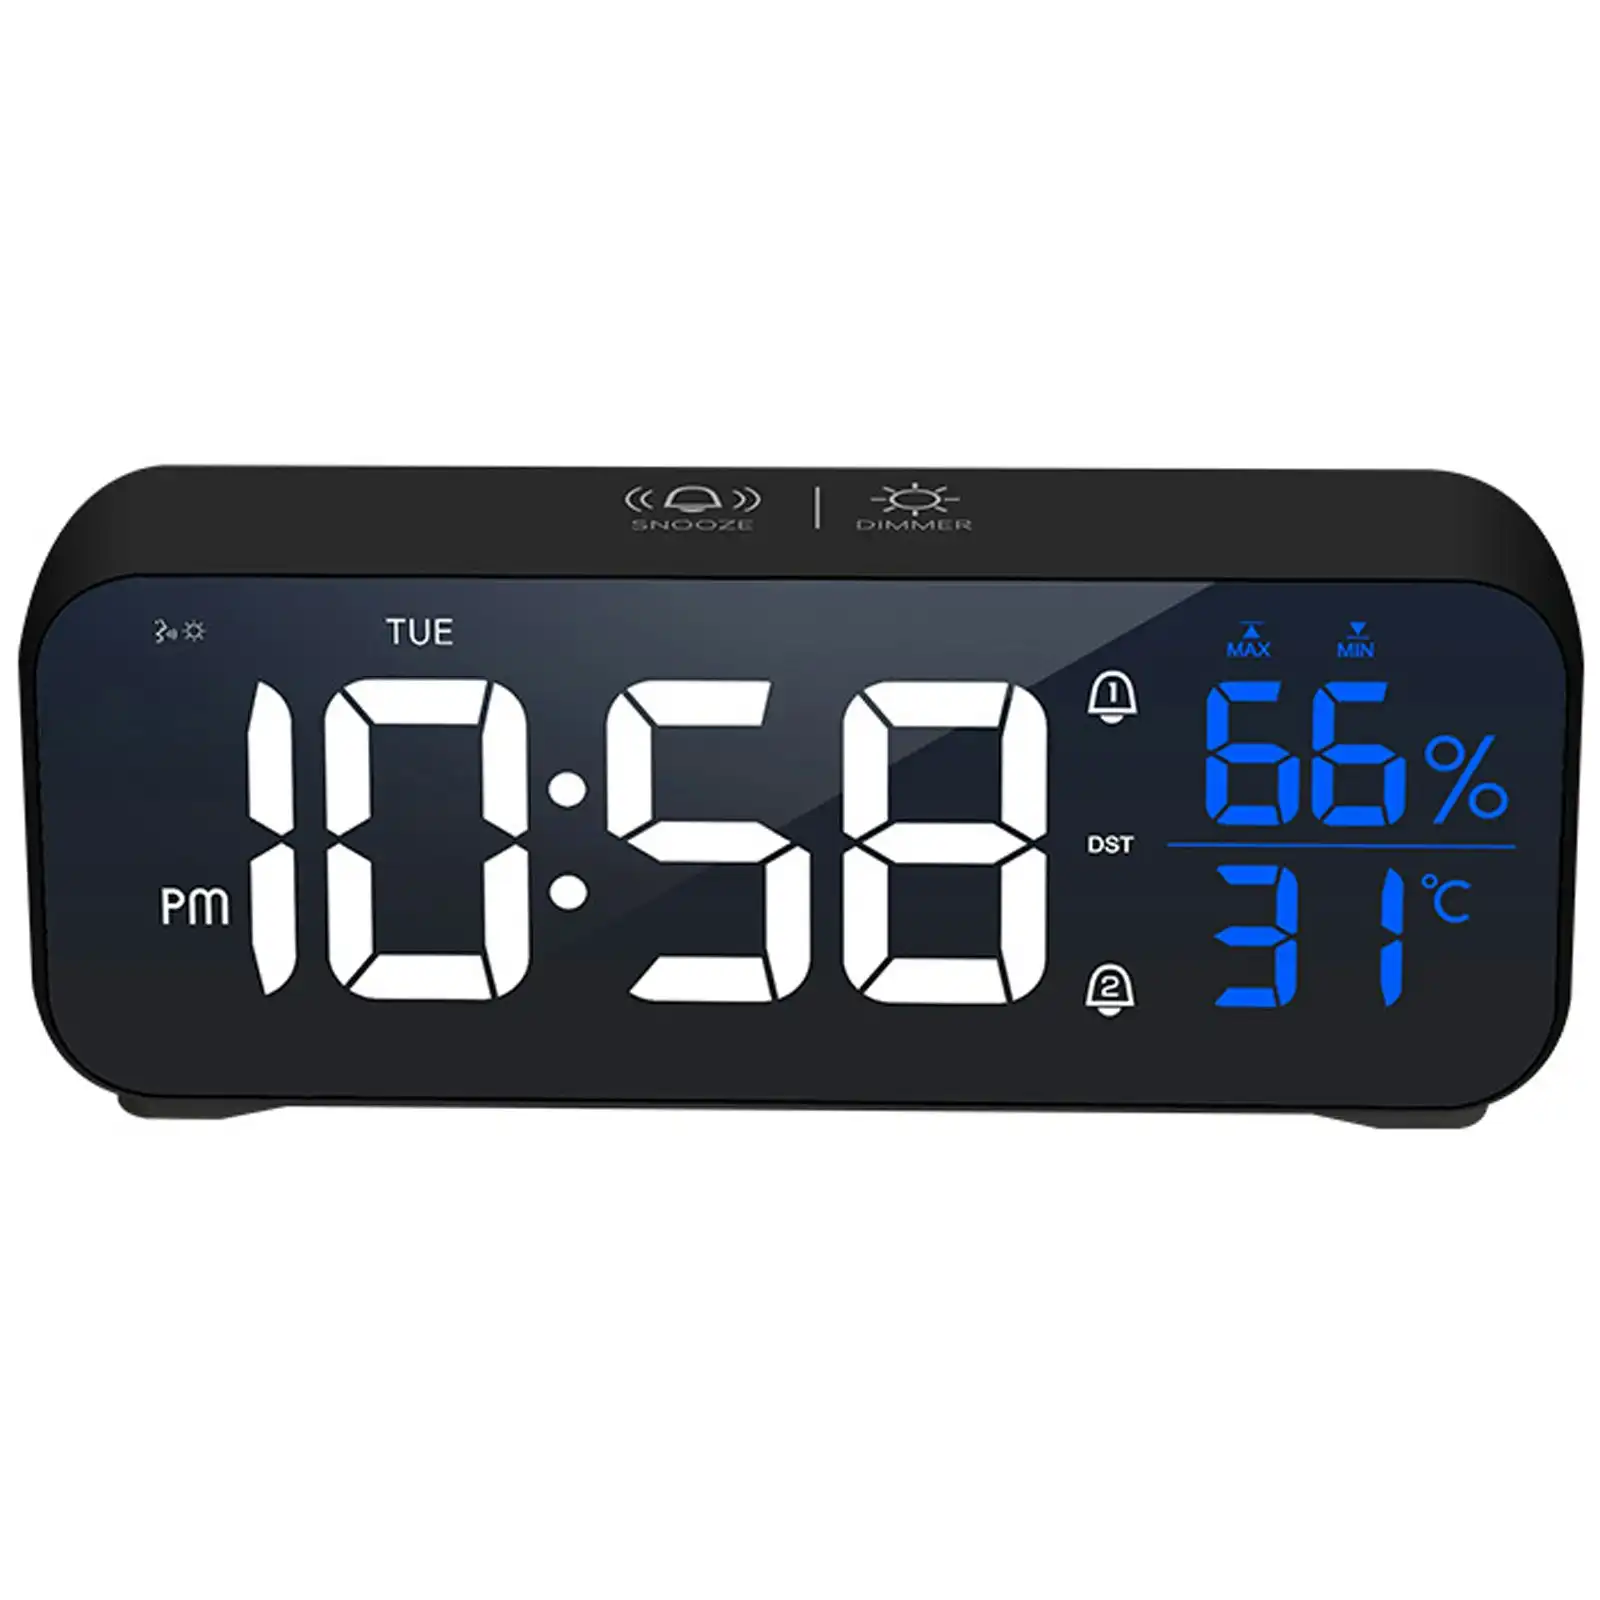 TODO LED Digital Alarm Clock Temperature Display Music Alarm USB Rechargeable - Black